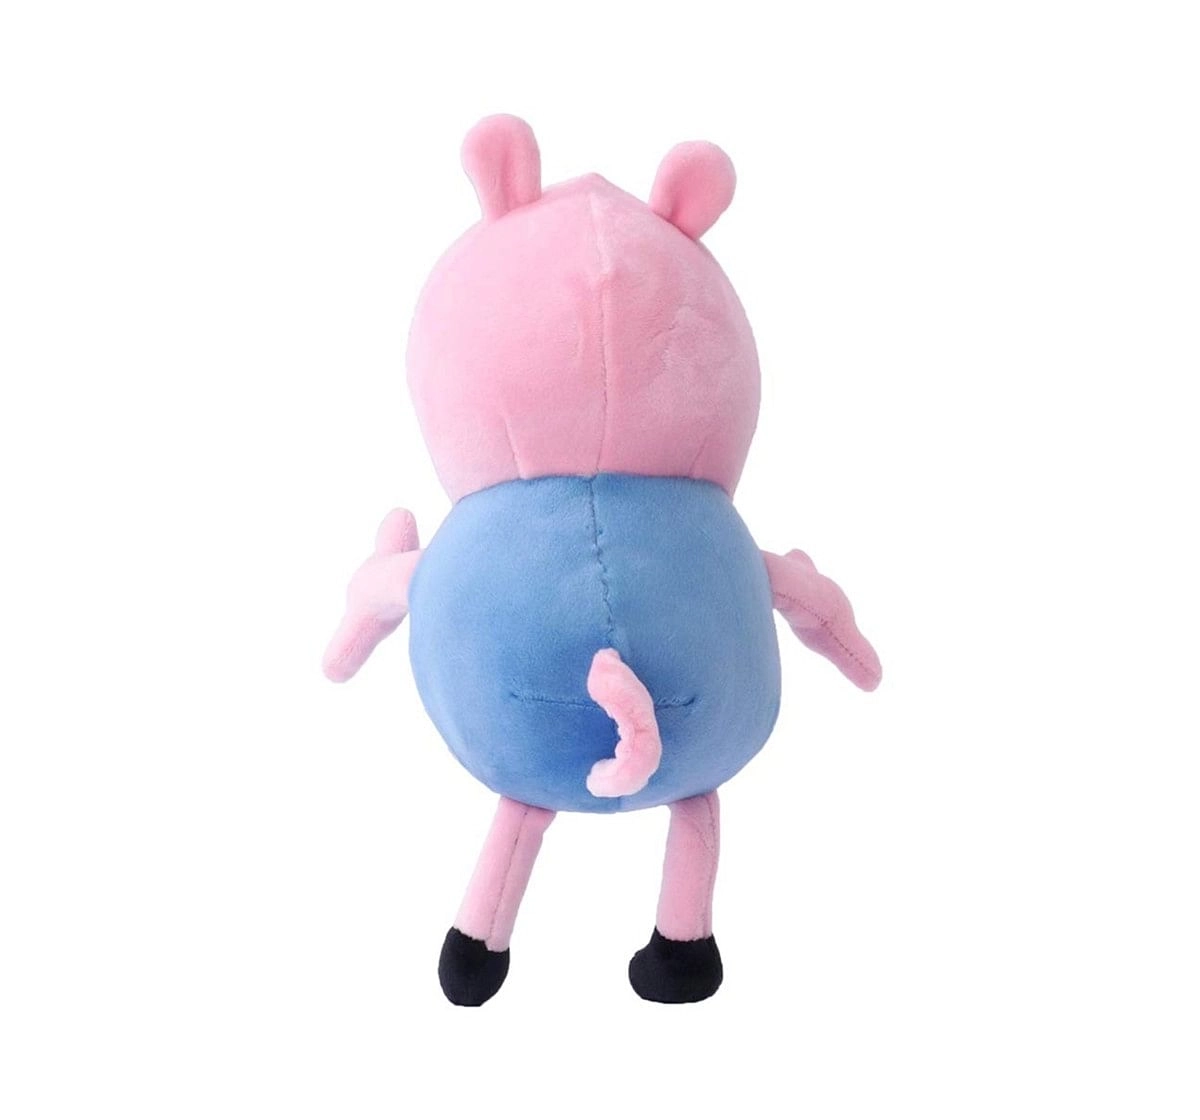 Peppa Pig George Super Soft Plush Toy for Kids age 1Y+ - 30 Cm 